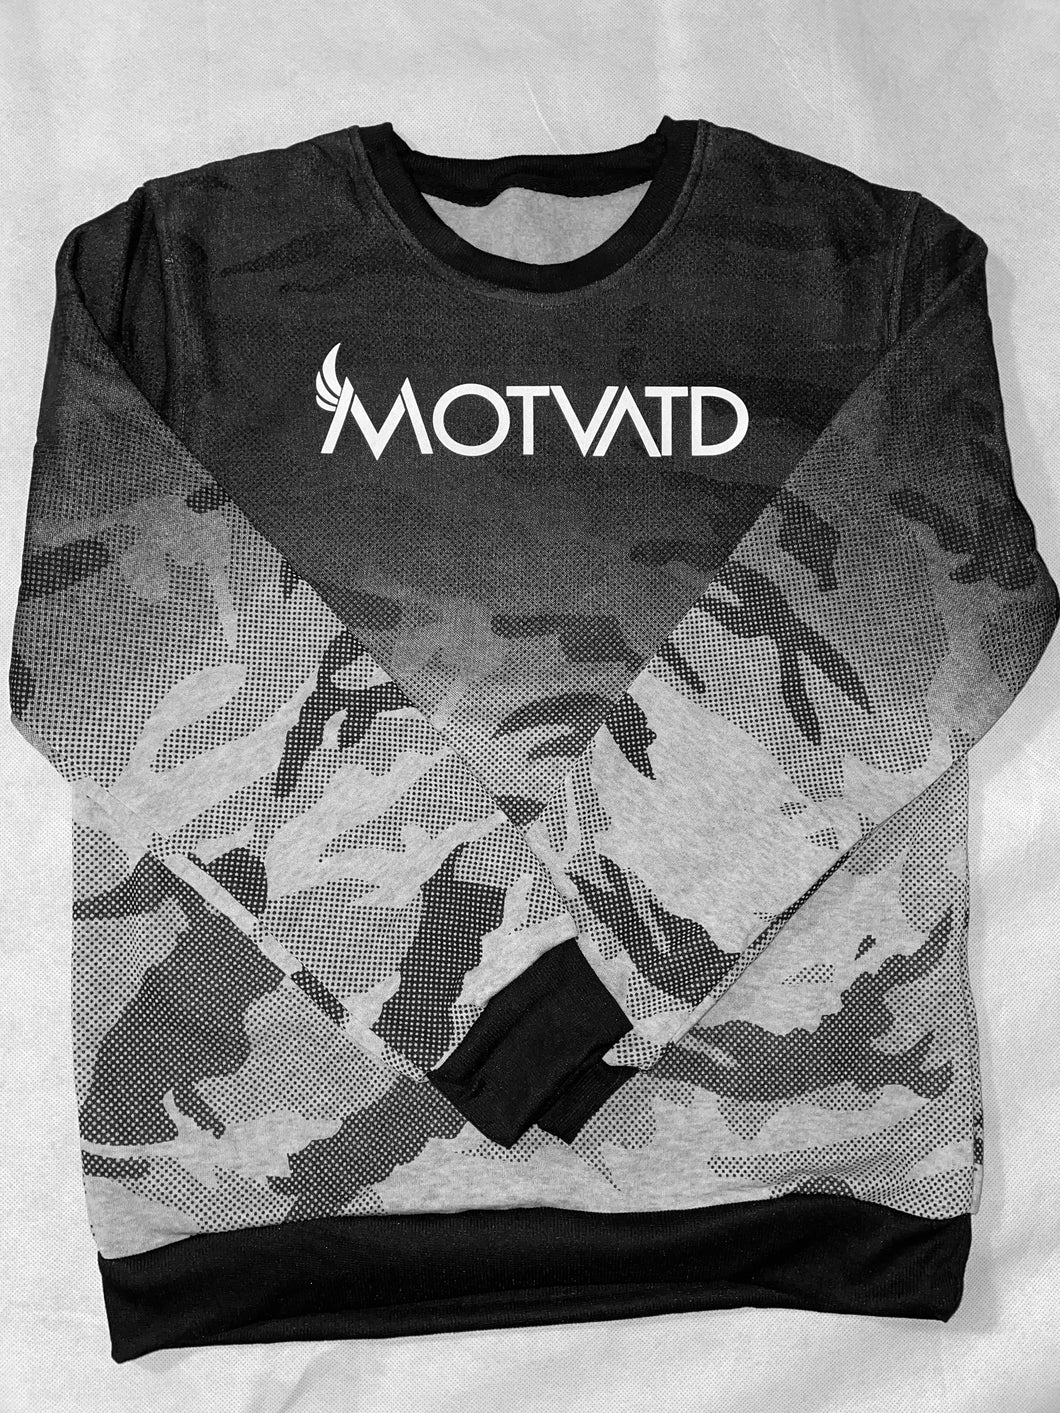 Grey Camo Print MOTVATD Sweatshirt